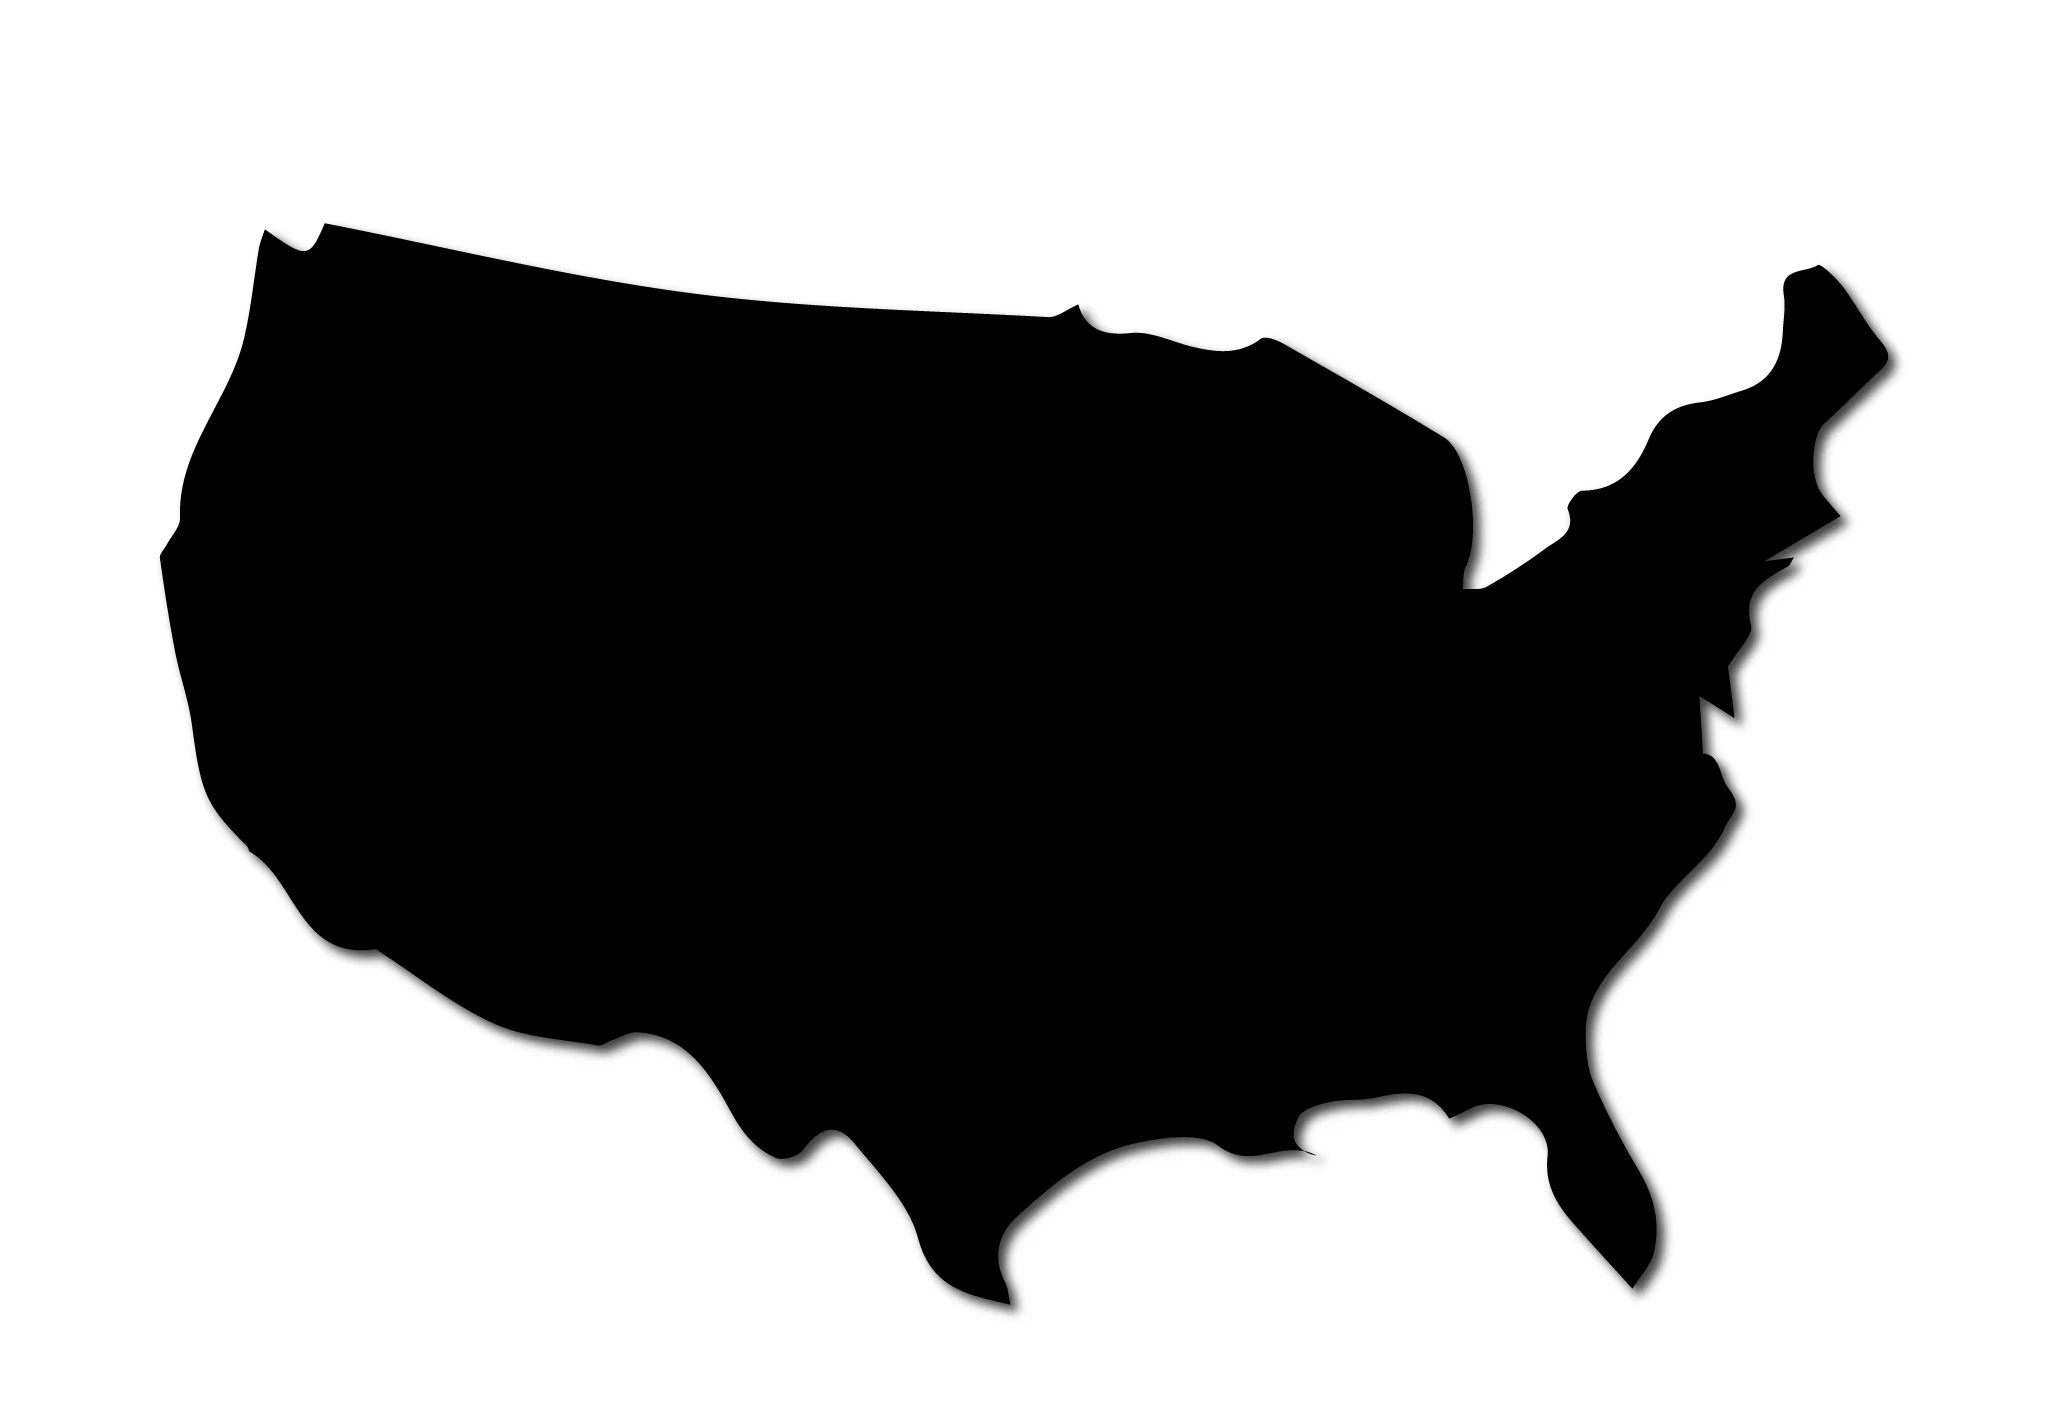 U.S Silhouette Black Map